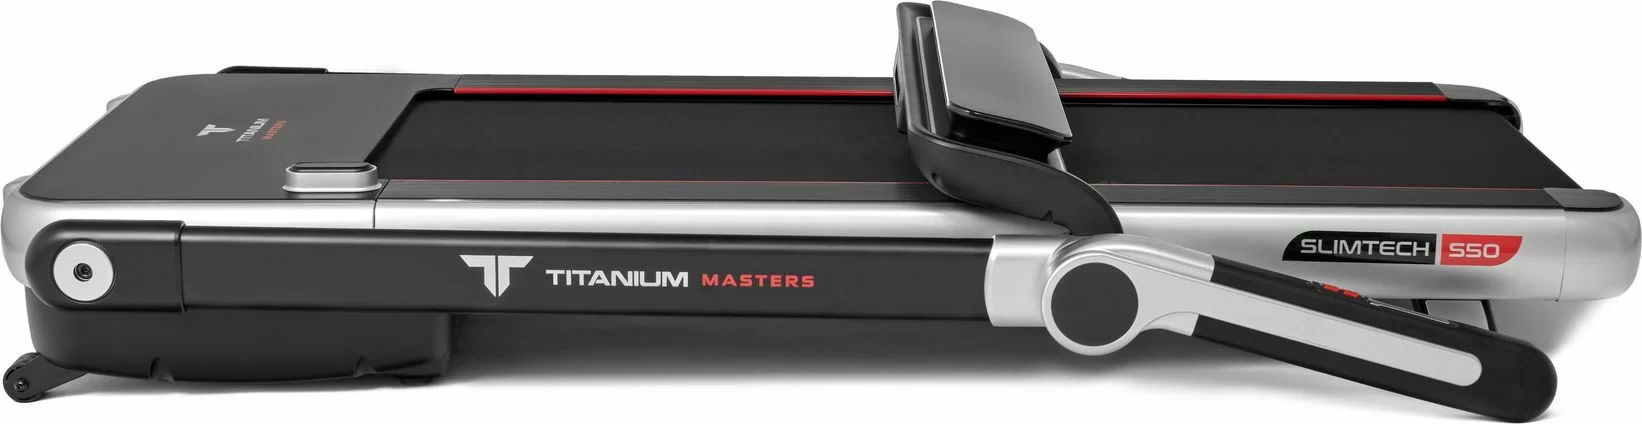 Фото Беговая дорожка Titanium Masters Slimtech S50 со склада магазина СпортСЕ